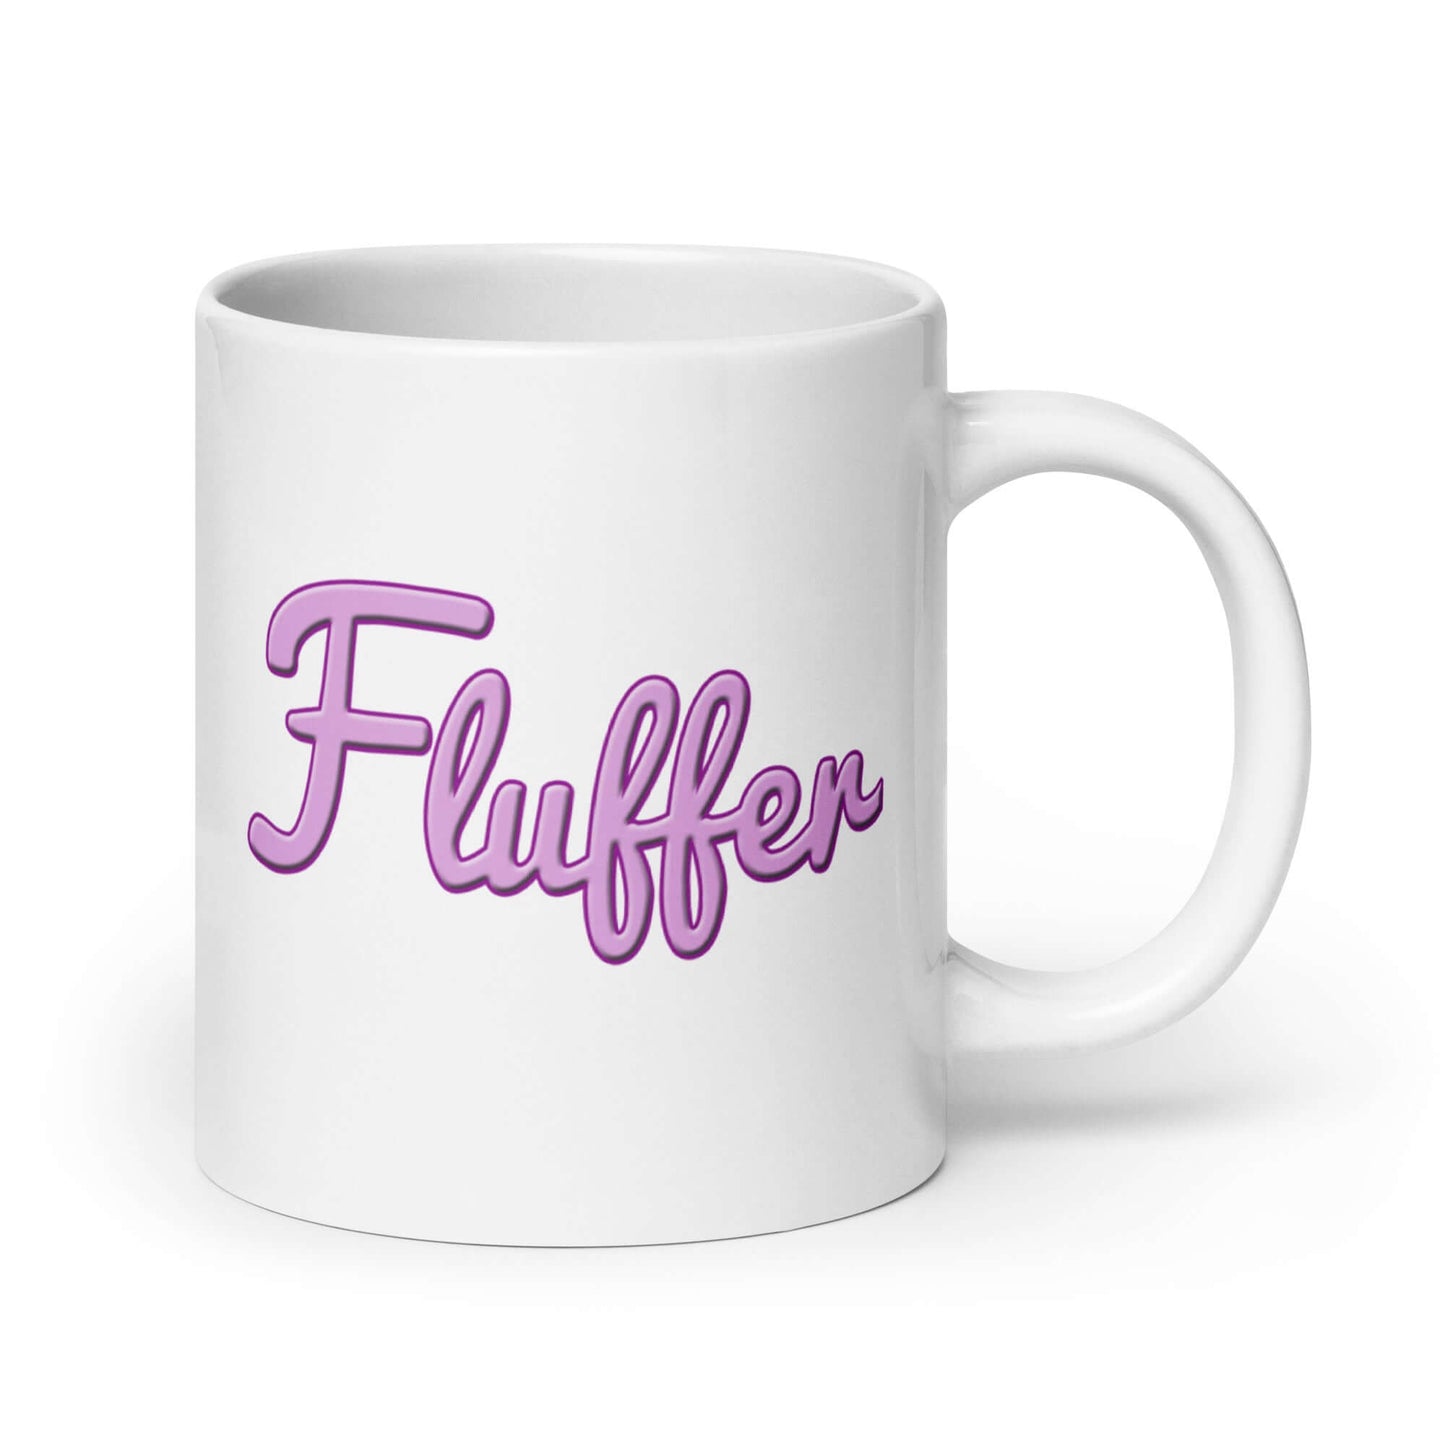 Fluffer ceramic coffee mug.